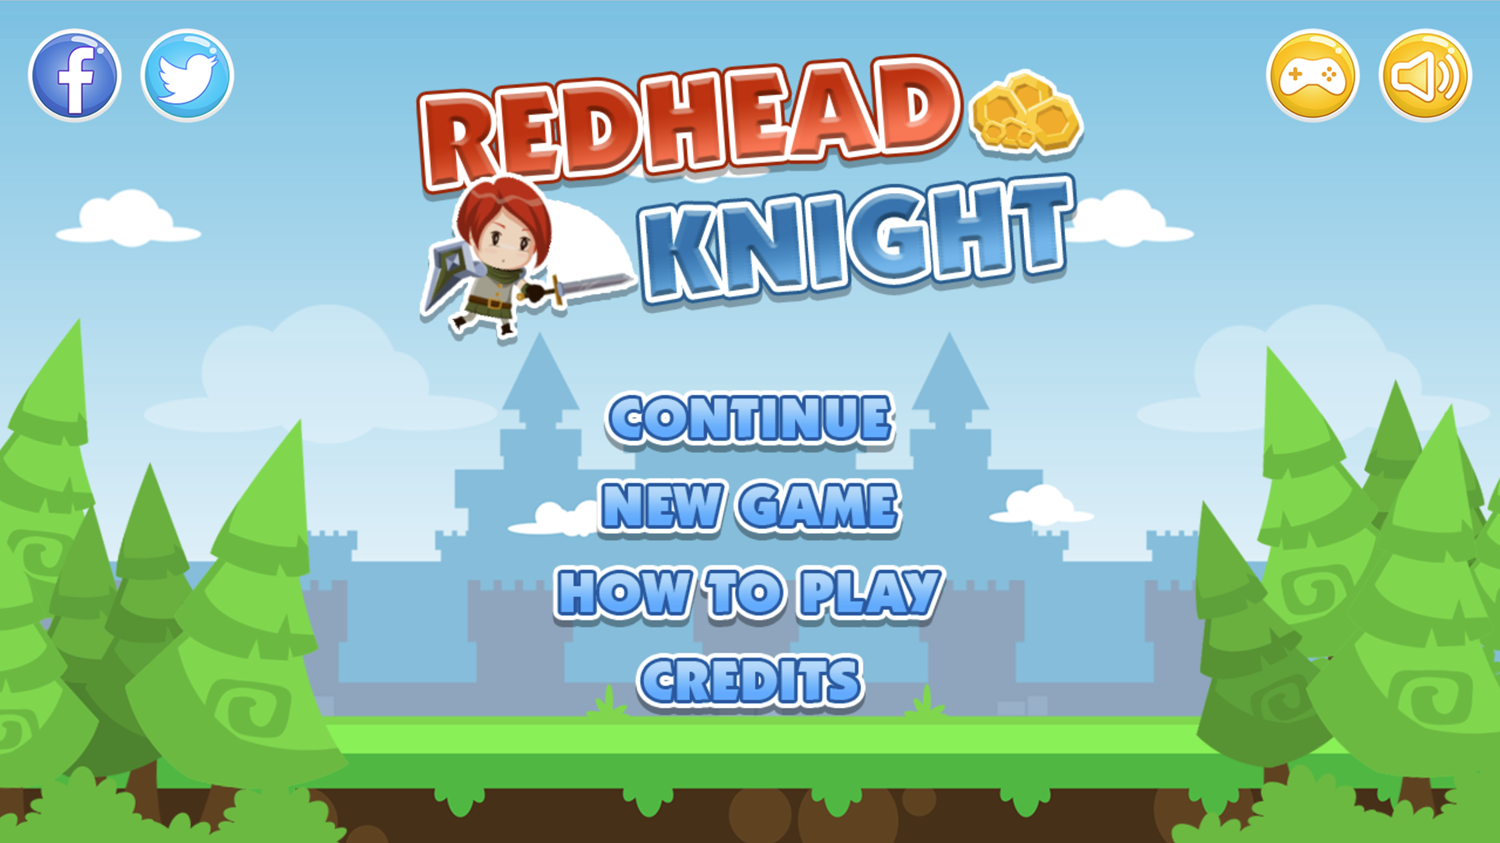 Redhead Knight Game Welcome Screen Screenshot.